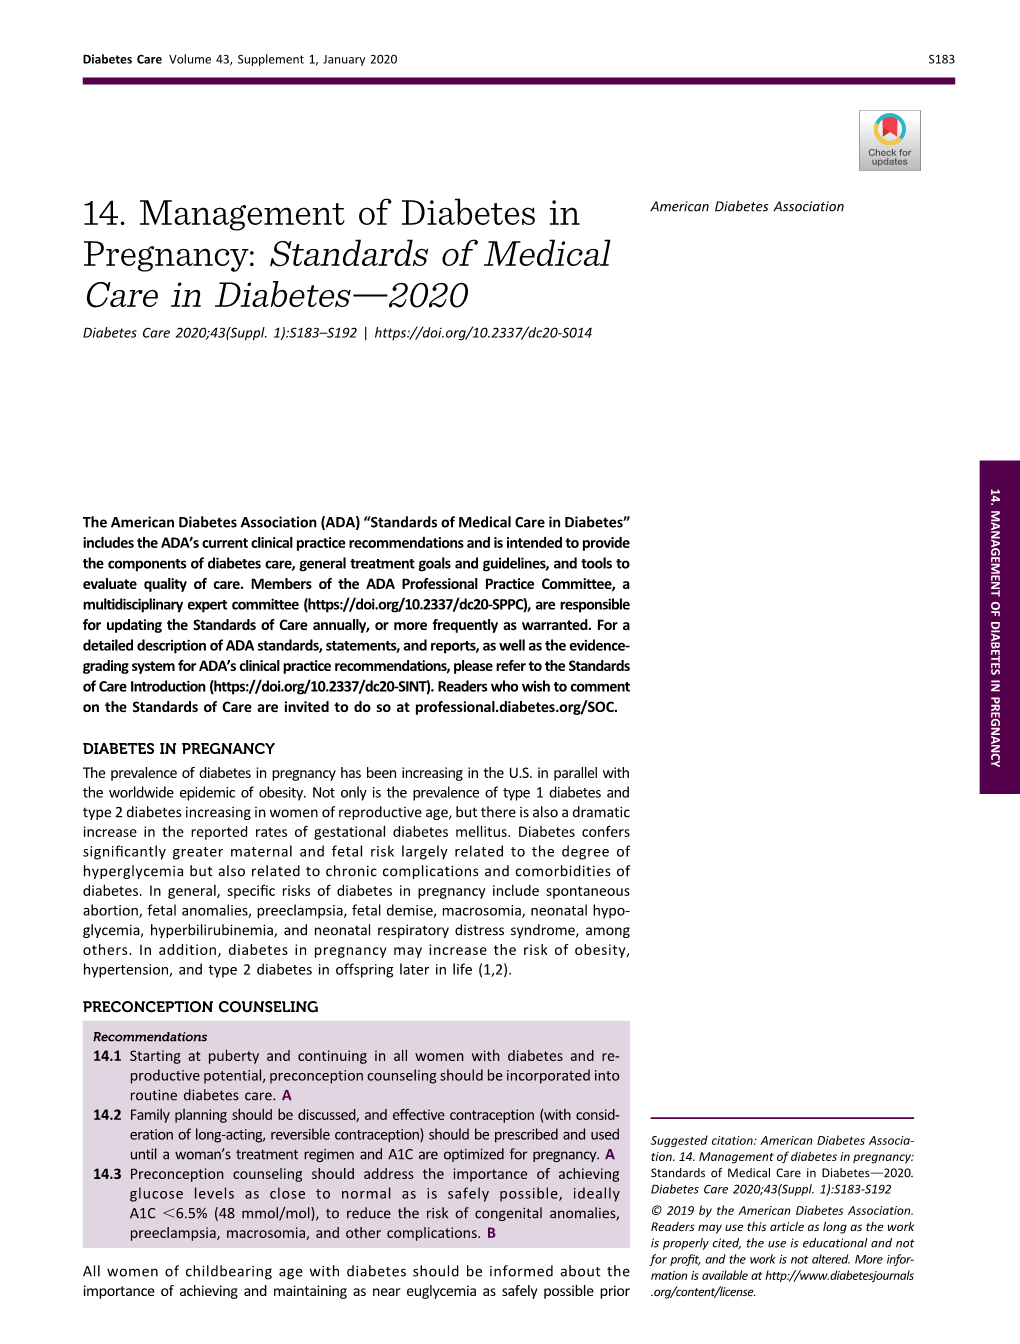 14. Management of Diabetes in Pregnancy: Standards of Medical